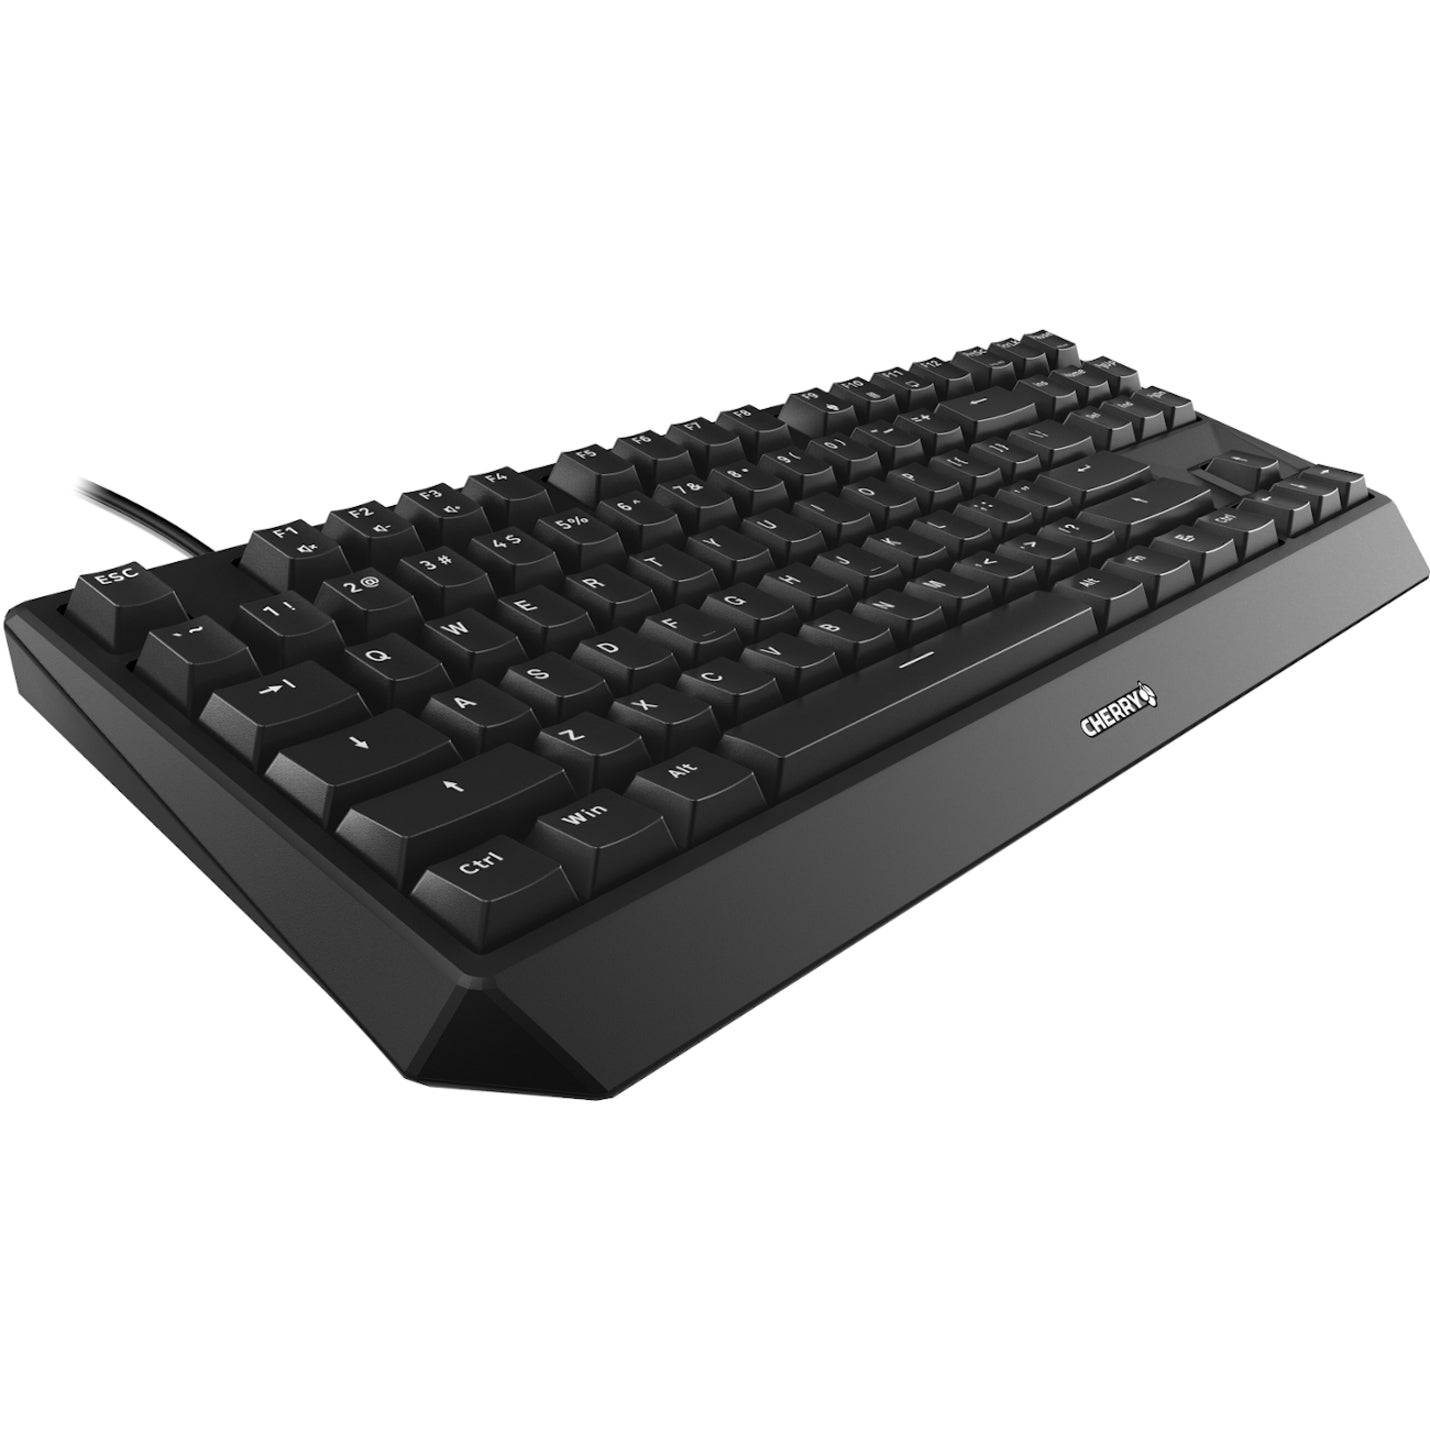 CHERRY G80-3815LWAUS-2 Keyboard, English (US), Black, Palm Rest